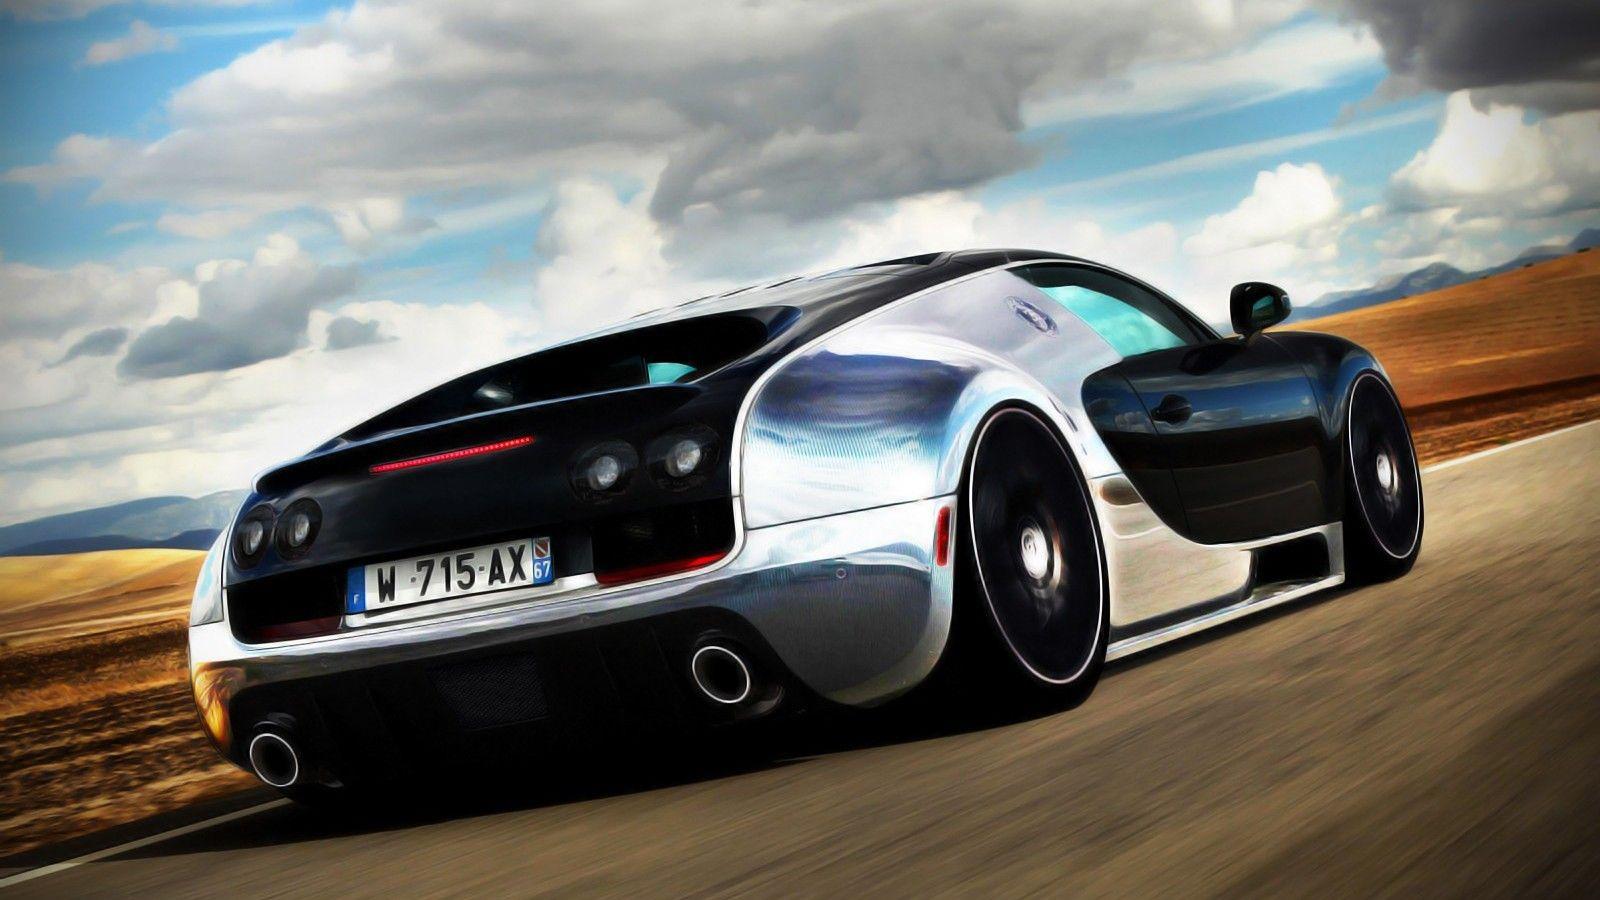 Cool Bugatti Wallpapers - Top Free Cool Bugatti Backgrounds